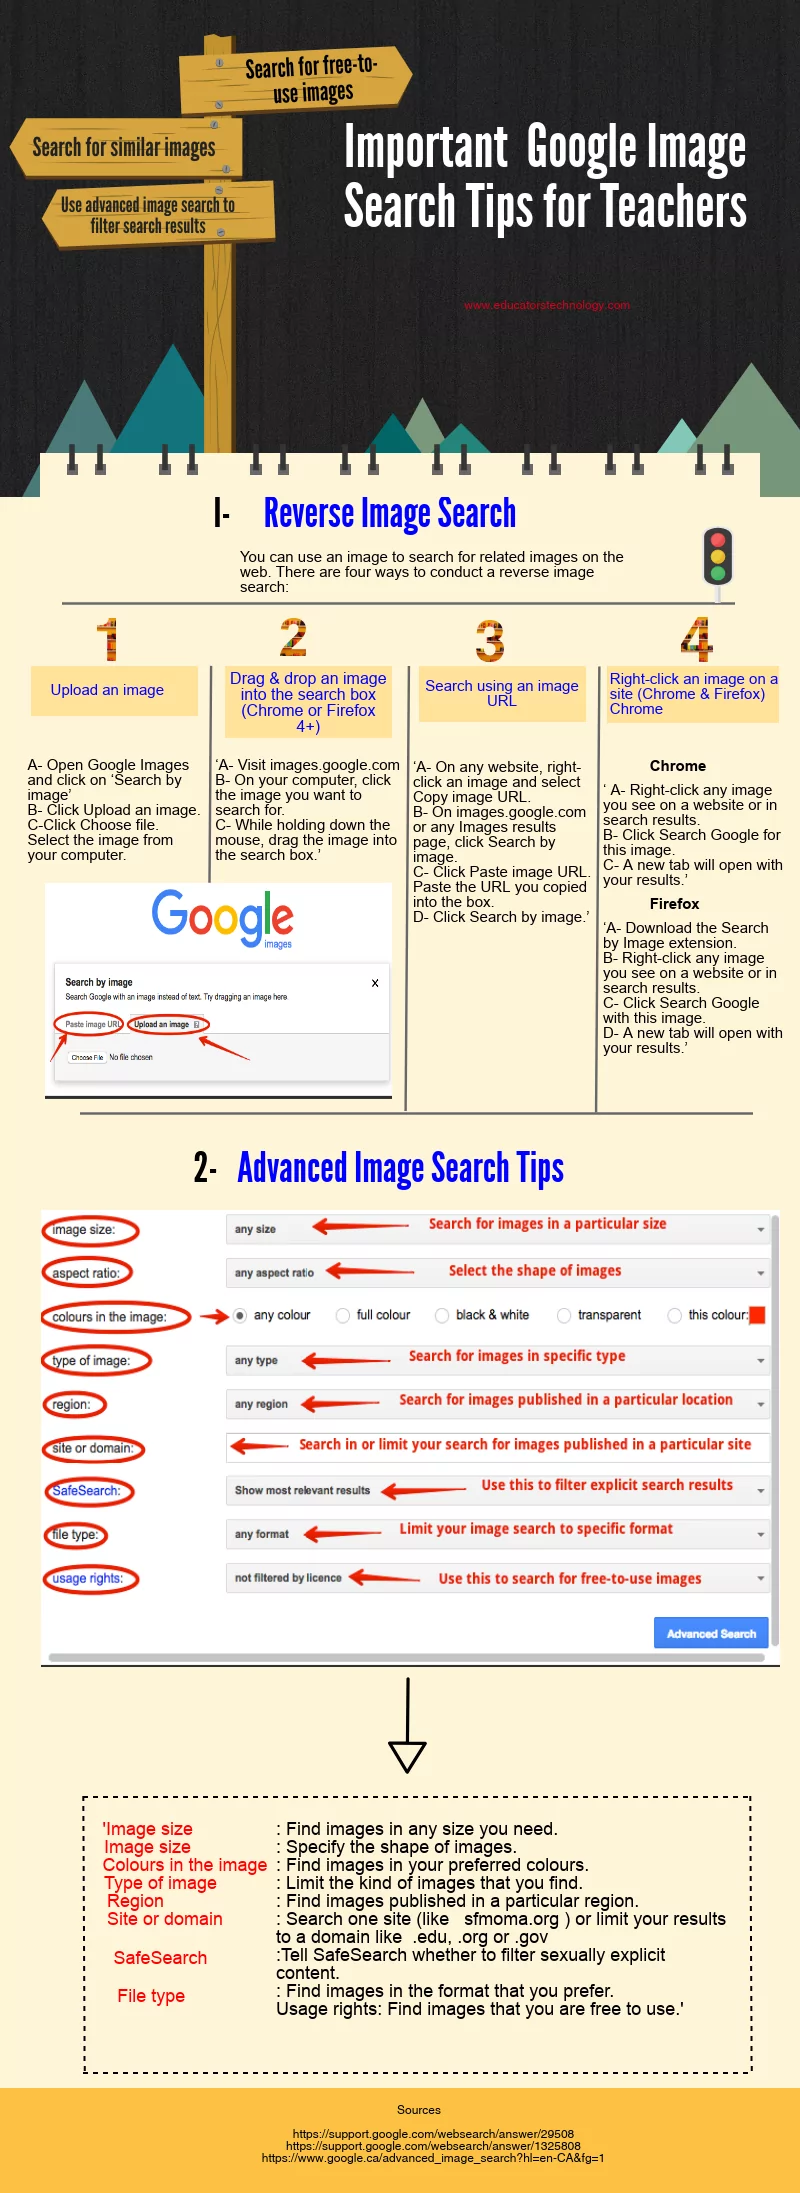 Some Very Good Google Image Tips for Teachers